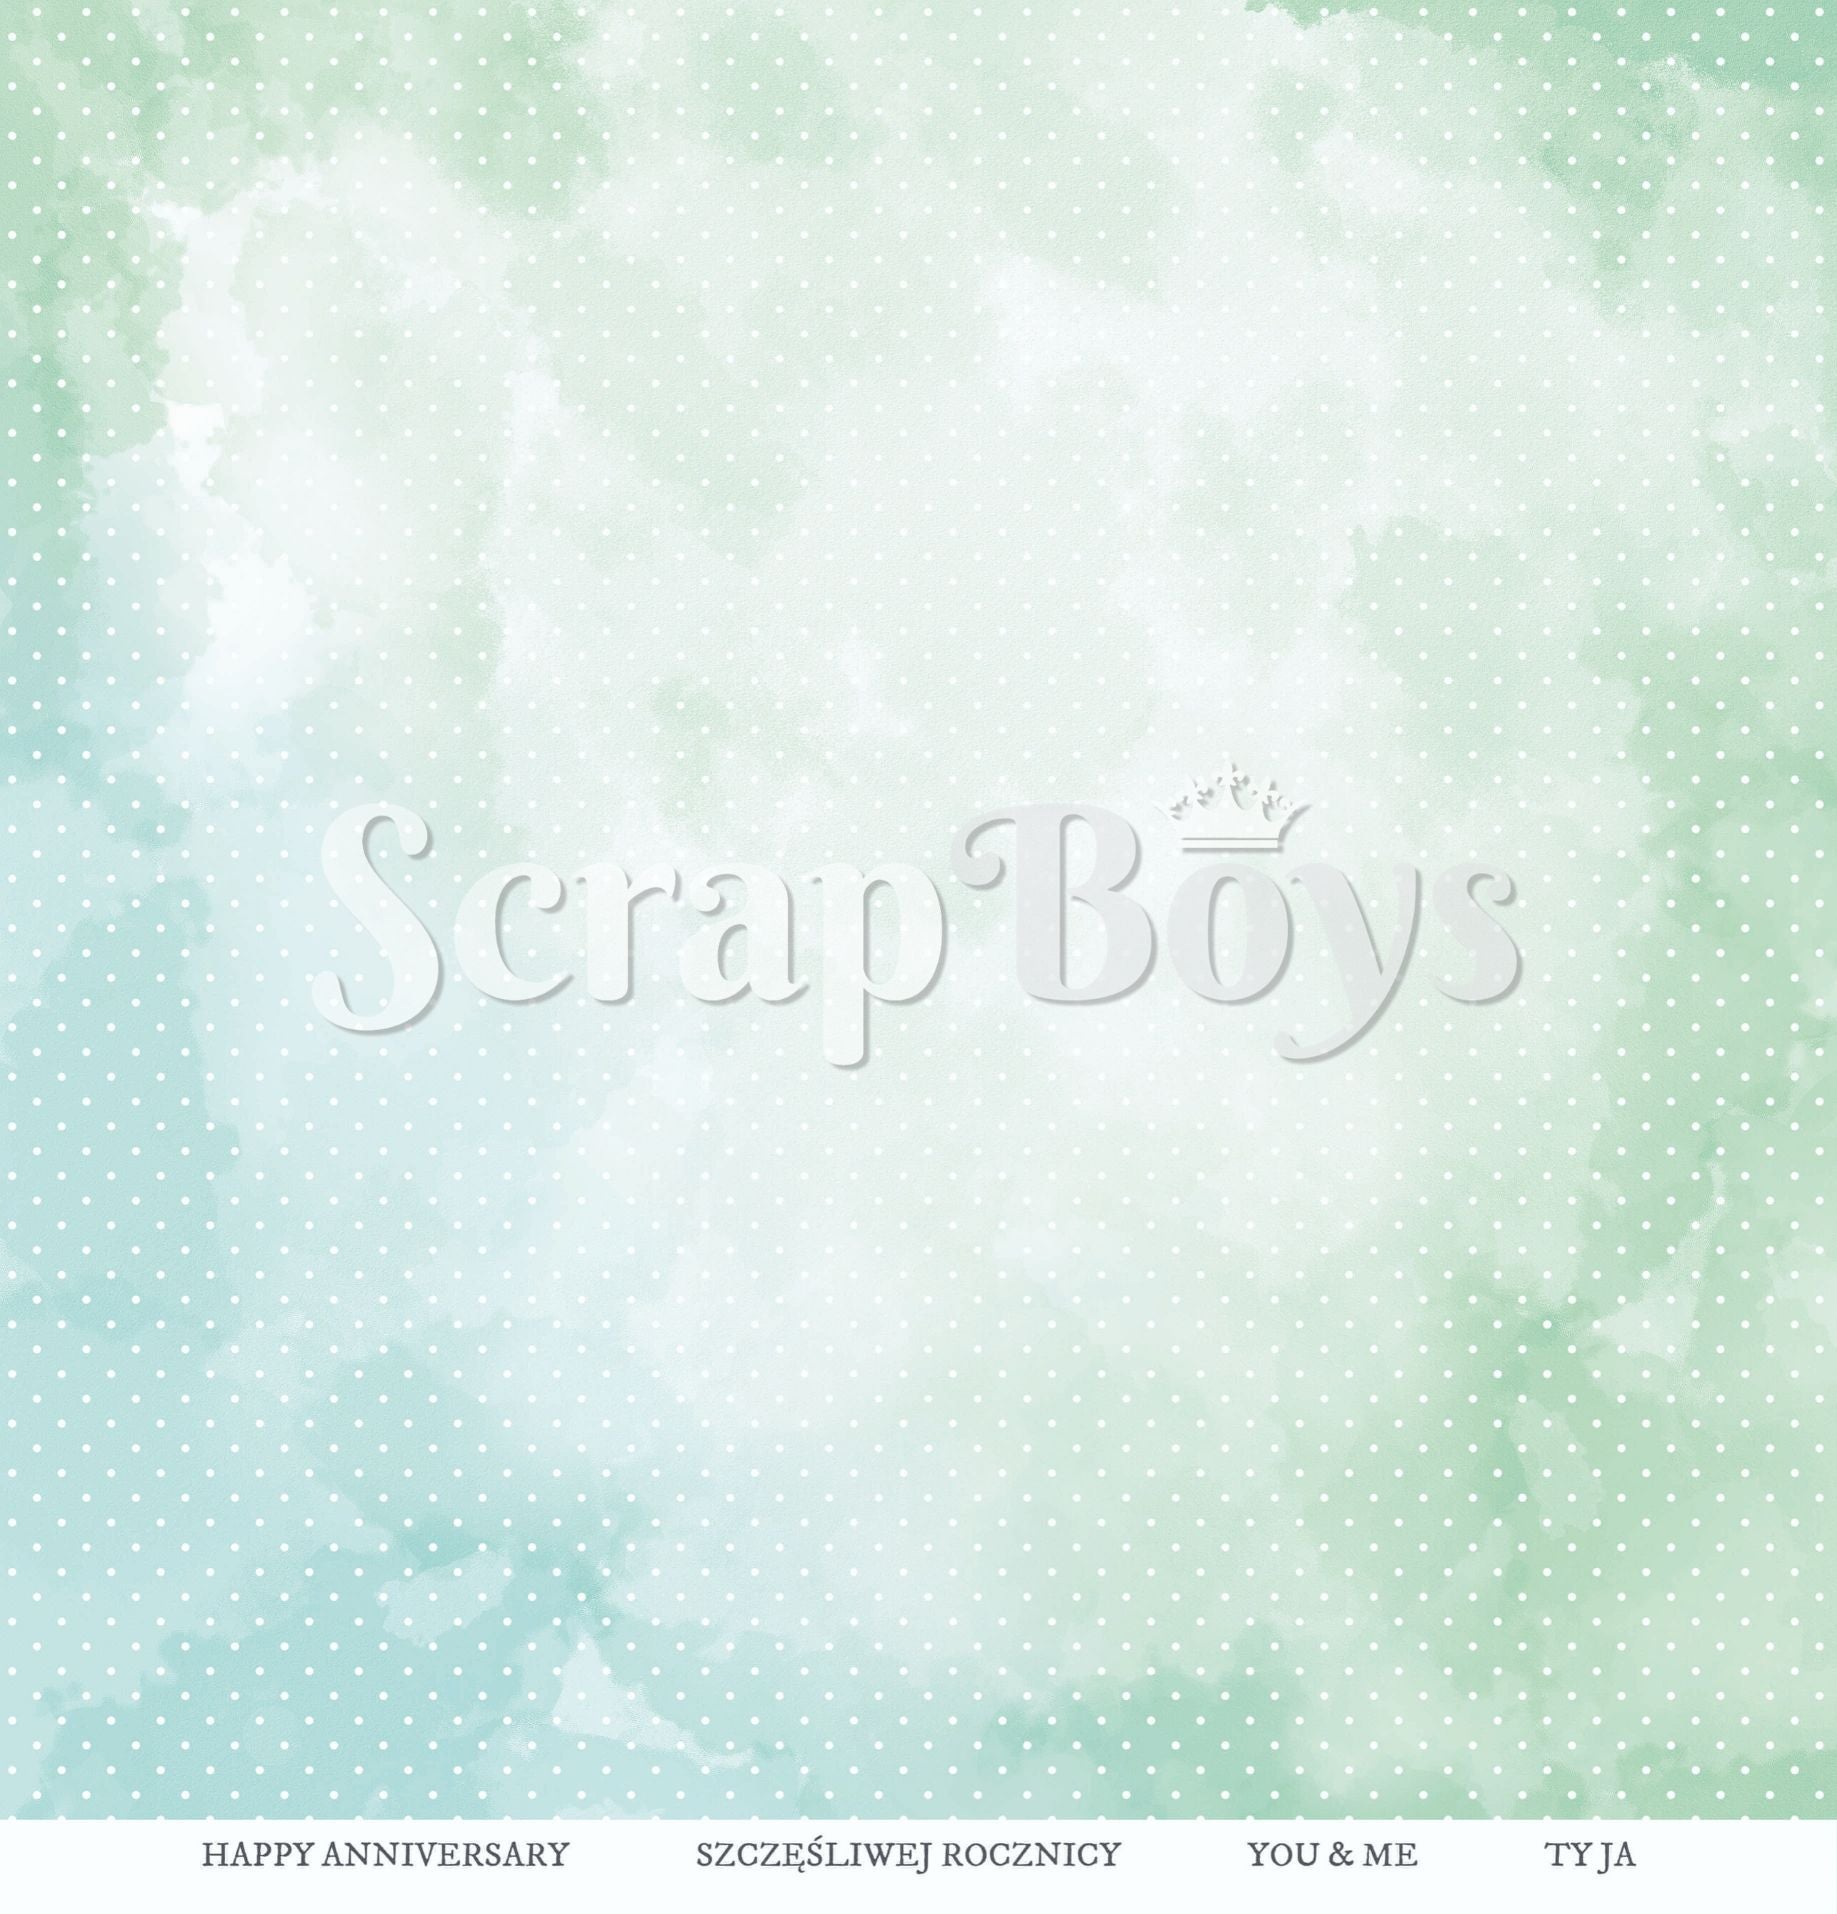 Scrapboys -  Primavera - Paper Pad  -  6 x 6"